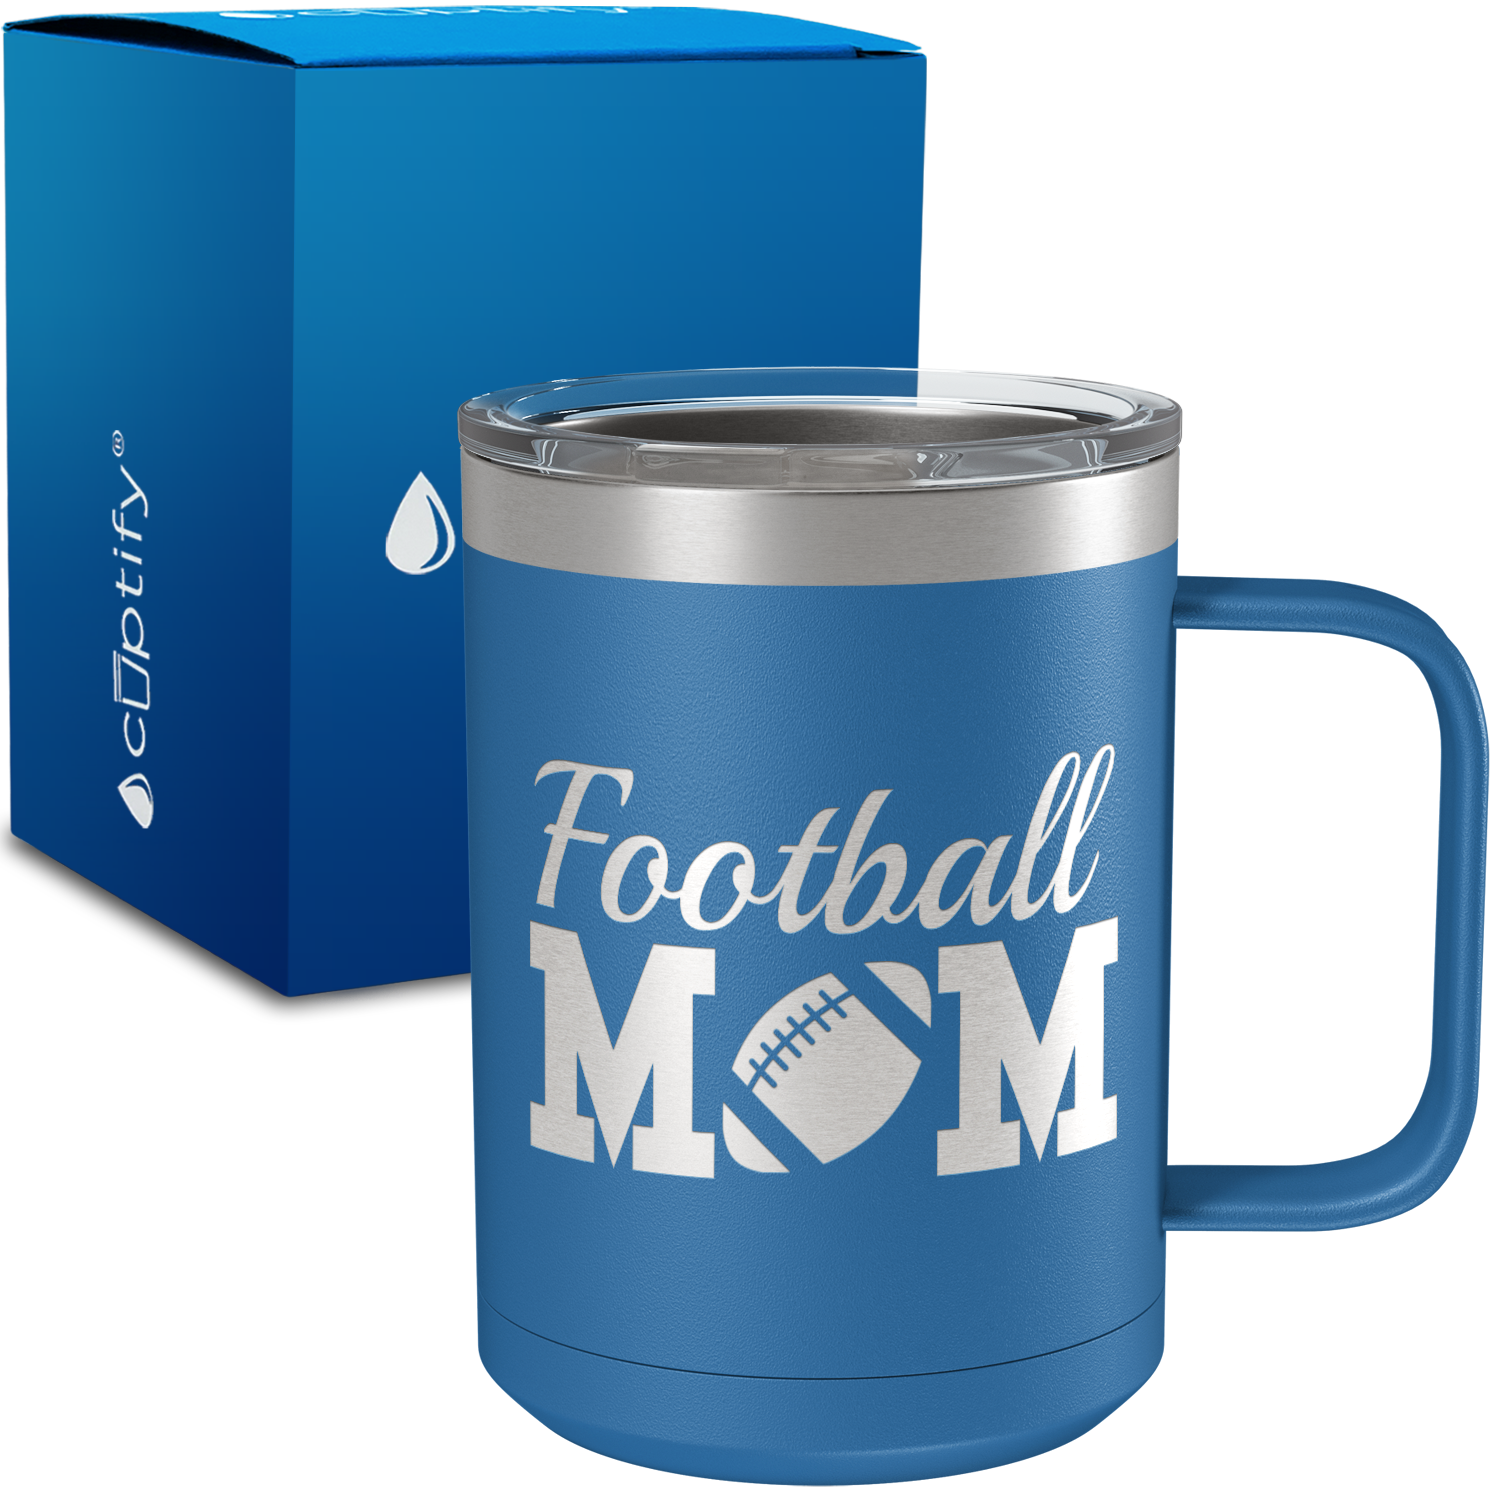 Football Mom 15oz Stainless Steel Mug